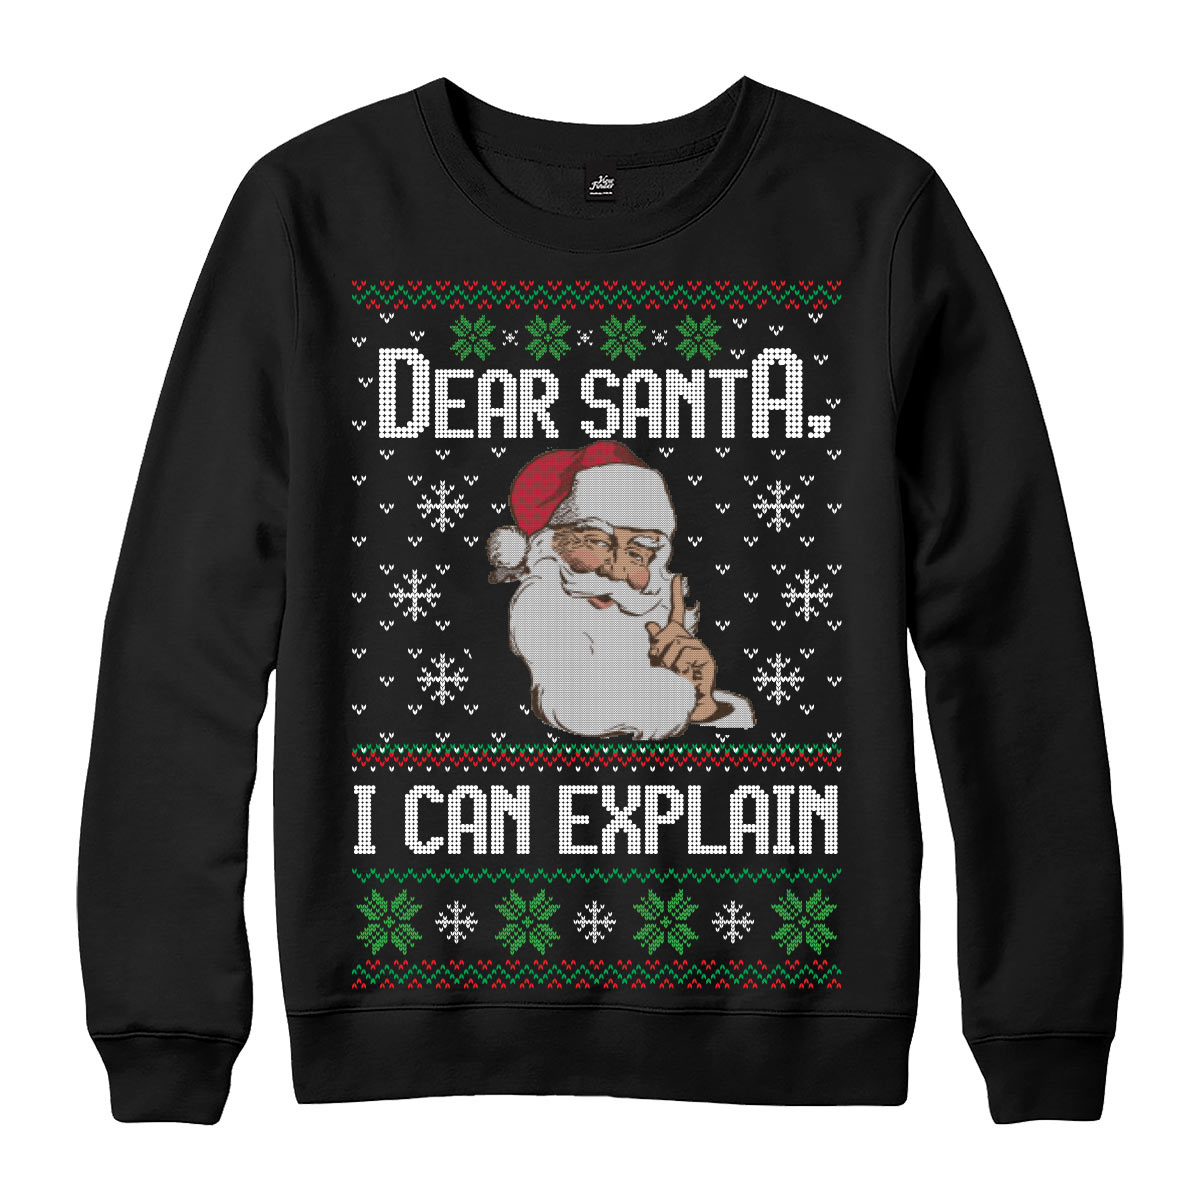 Christmas ugly sweater design xmas jumper teespring amazone Merry Christmas trumpmas